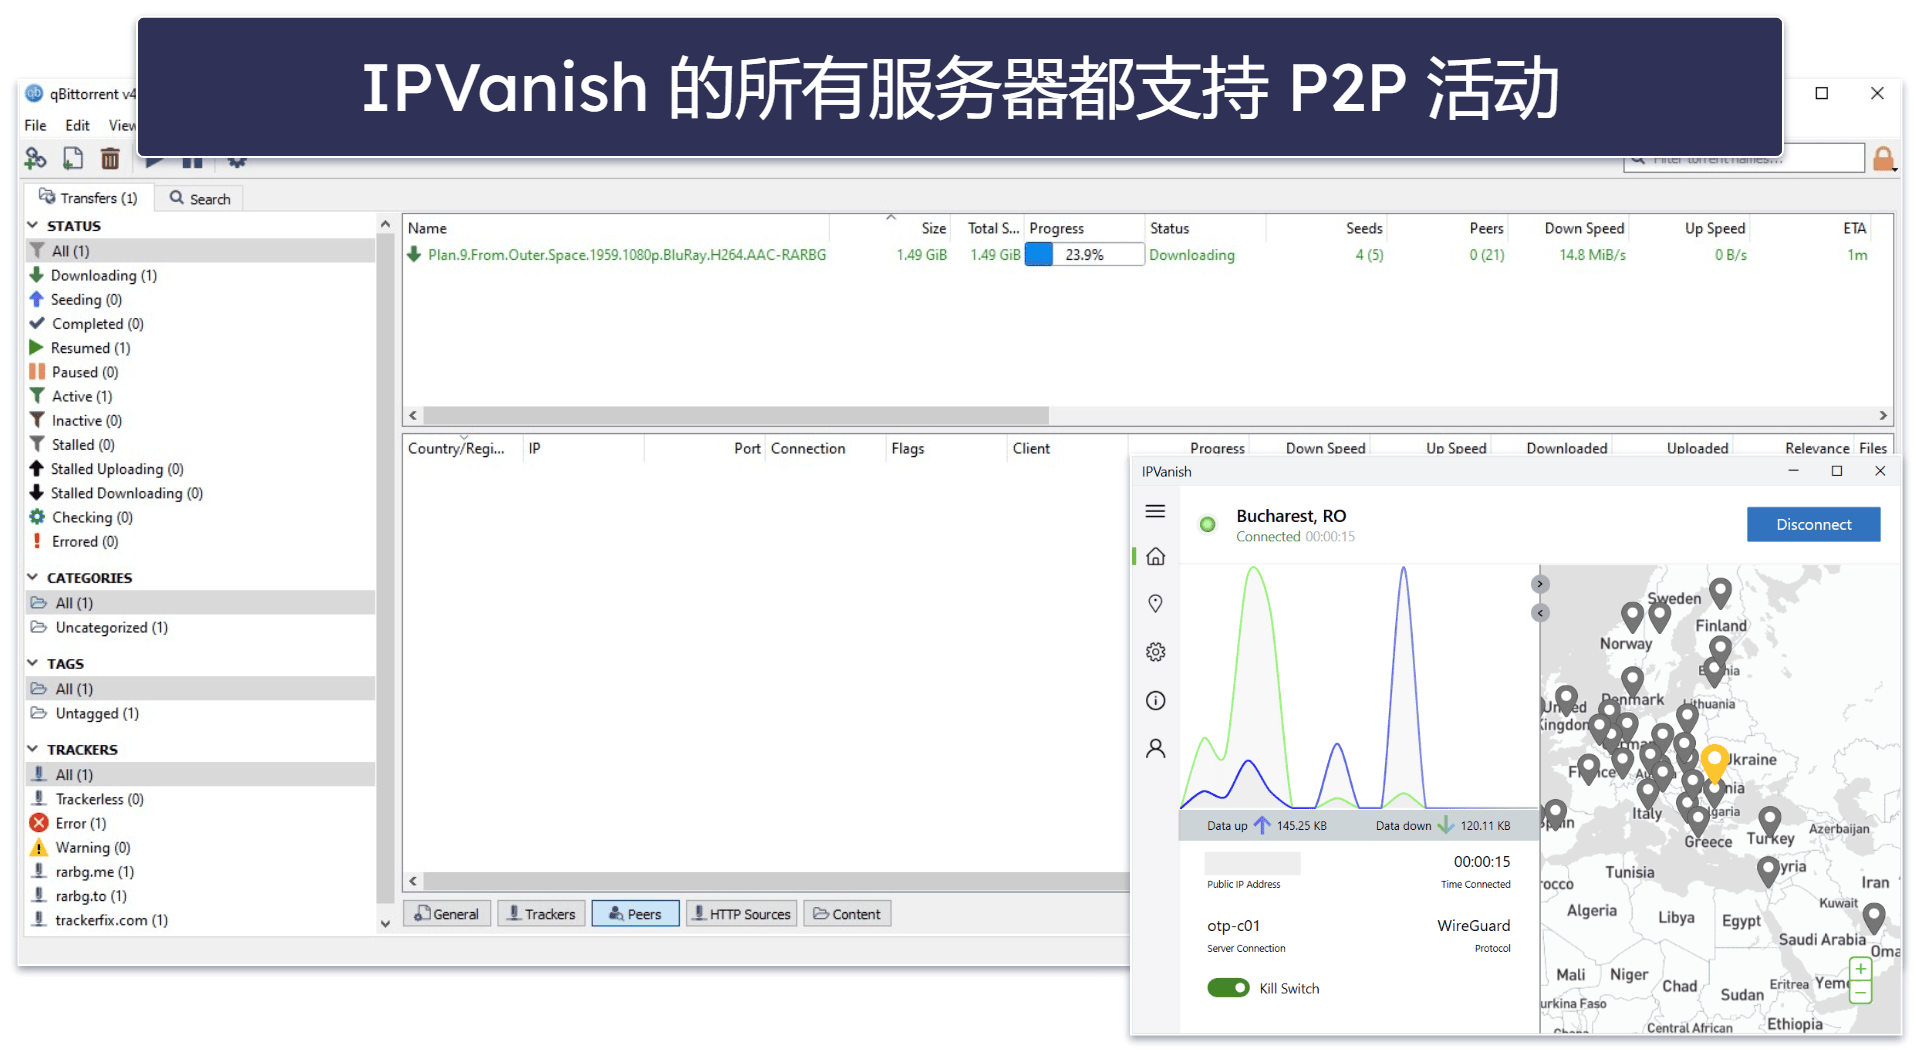 IPVanish 种子下载性能